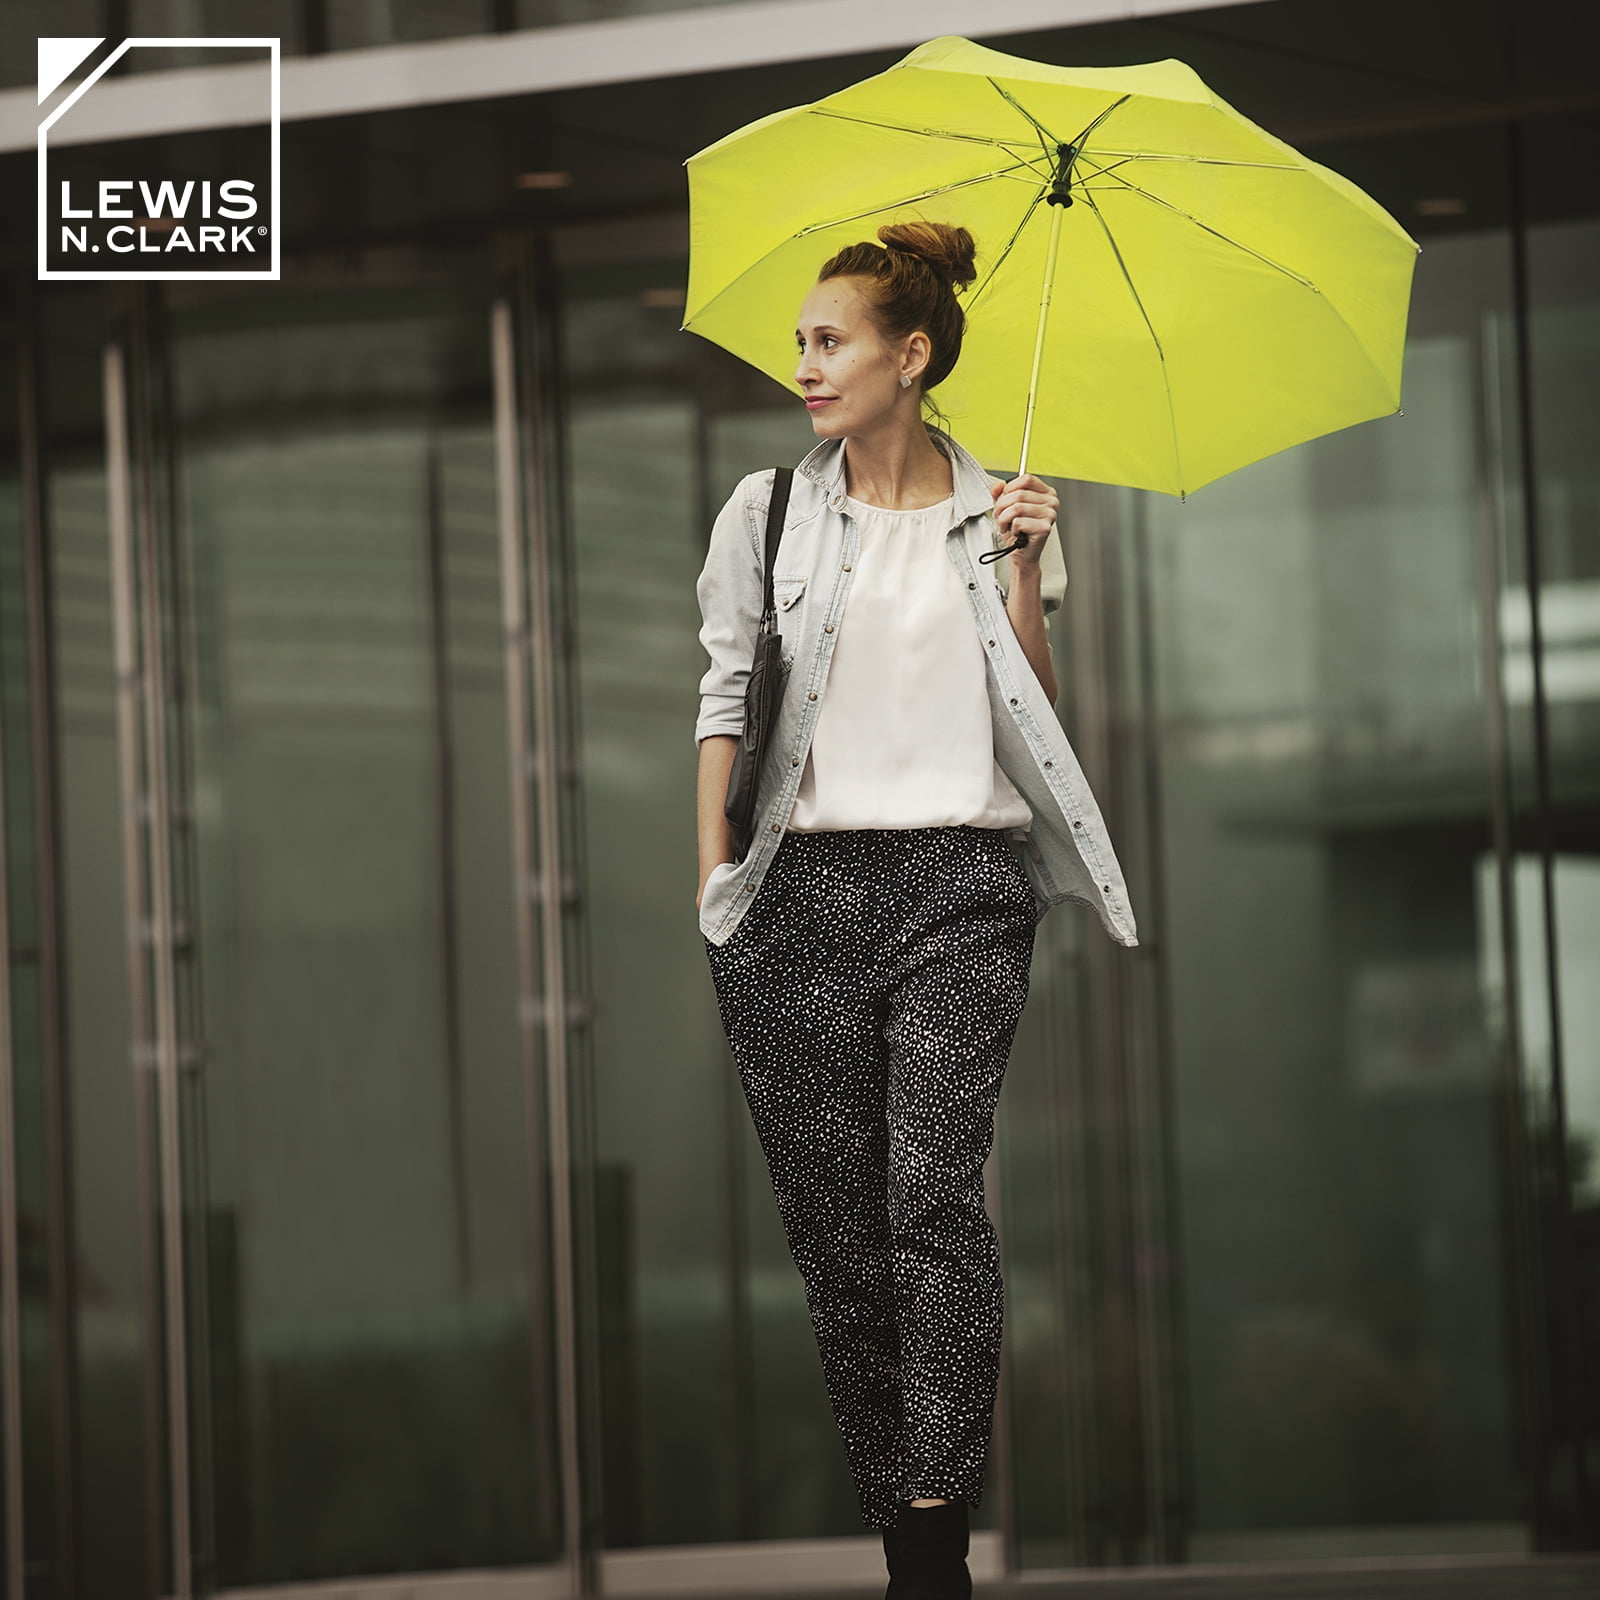 One Size Clark Automatic Travel Umbrella Lewis N Orange 